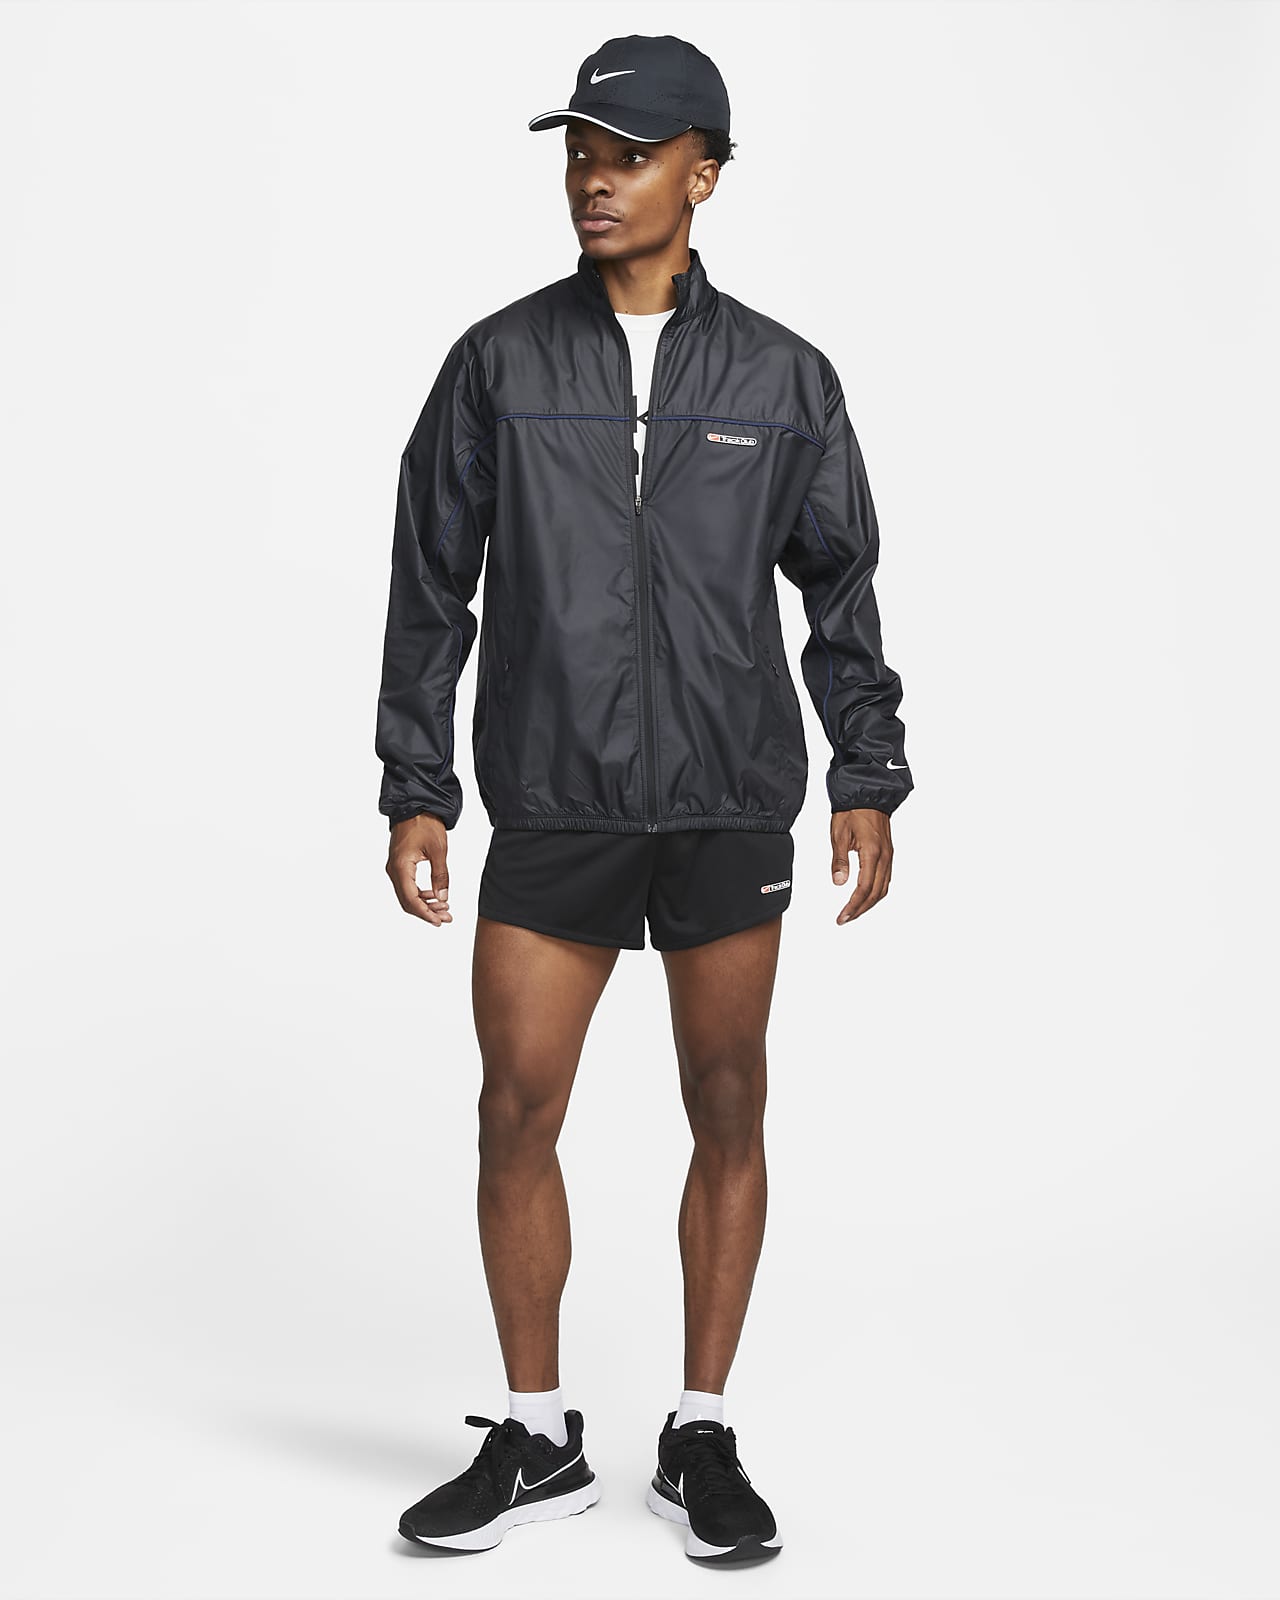 Nike Track Club Men's Storm-FIT Running Jacket.